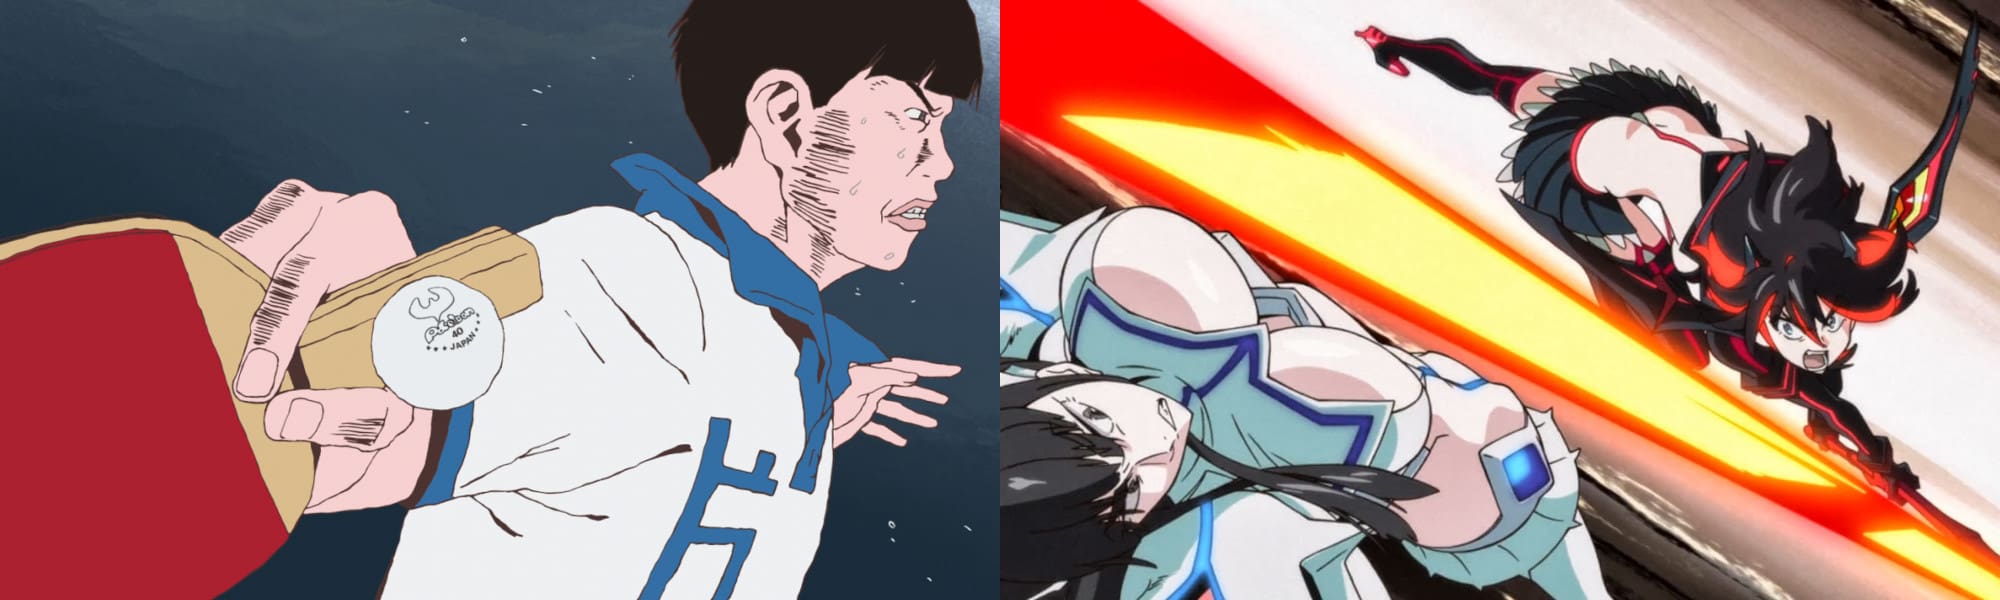 Christy Karacas Recruited Legendary Anime House Studio 4°C For His New  Special 'Ballmastrz: Rubicon'